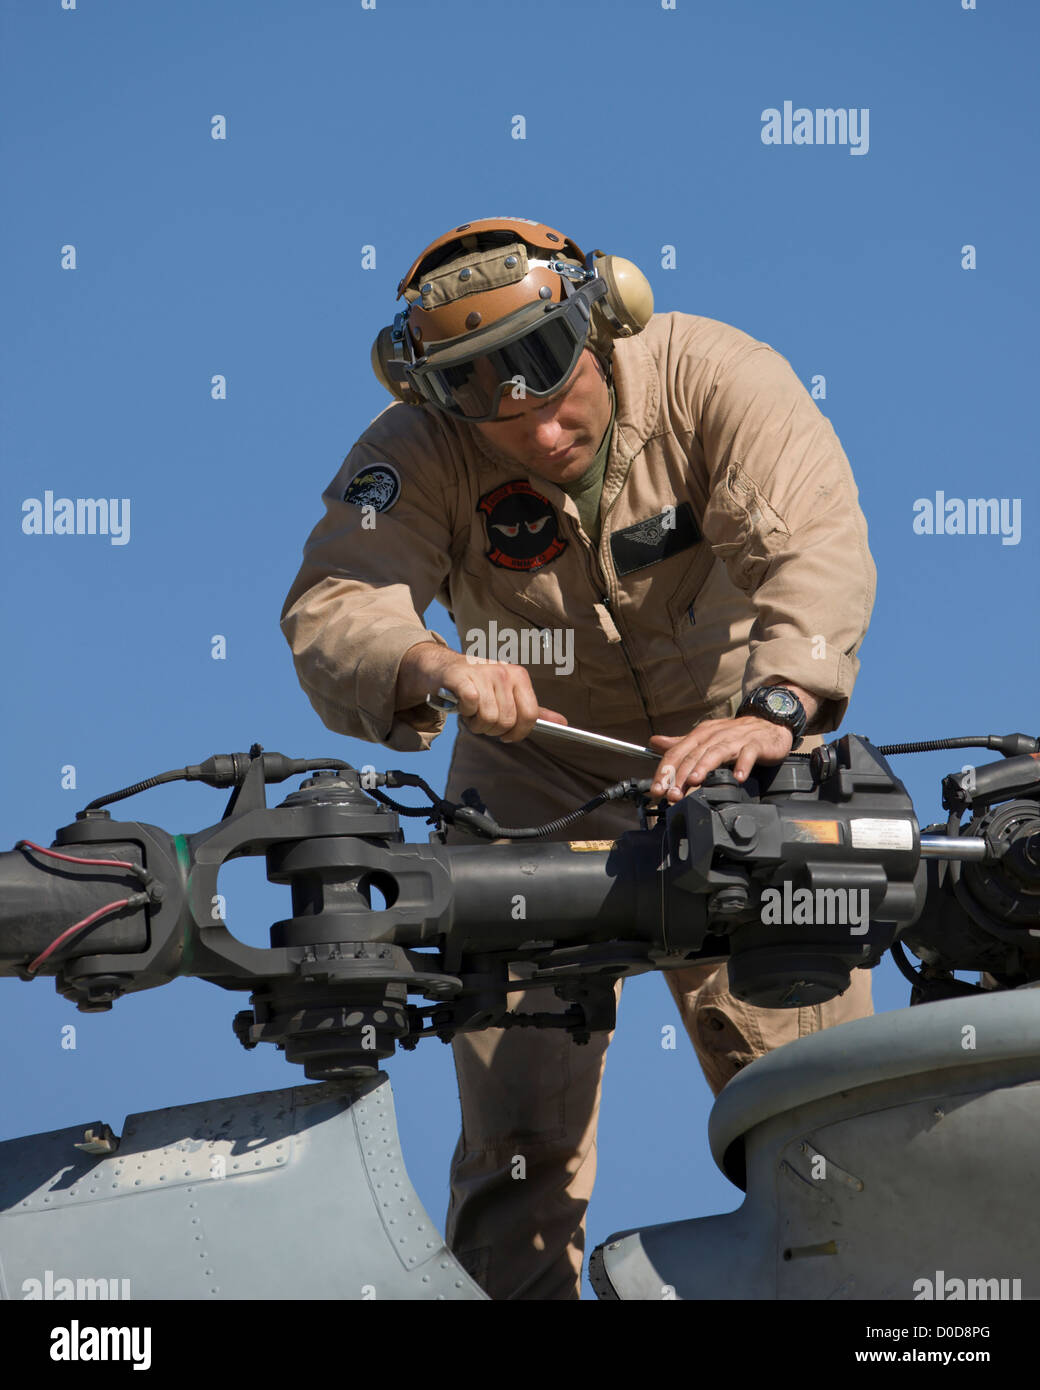 U.S. Marine Aviation Technician Working on Rotor Assembly Stock Photo